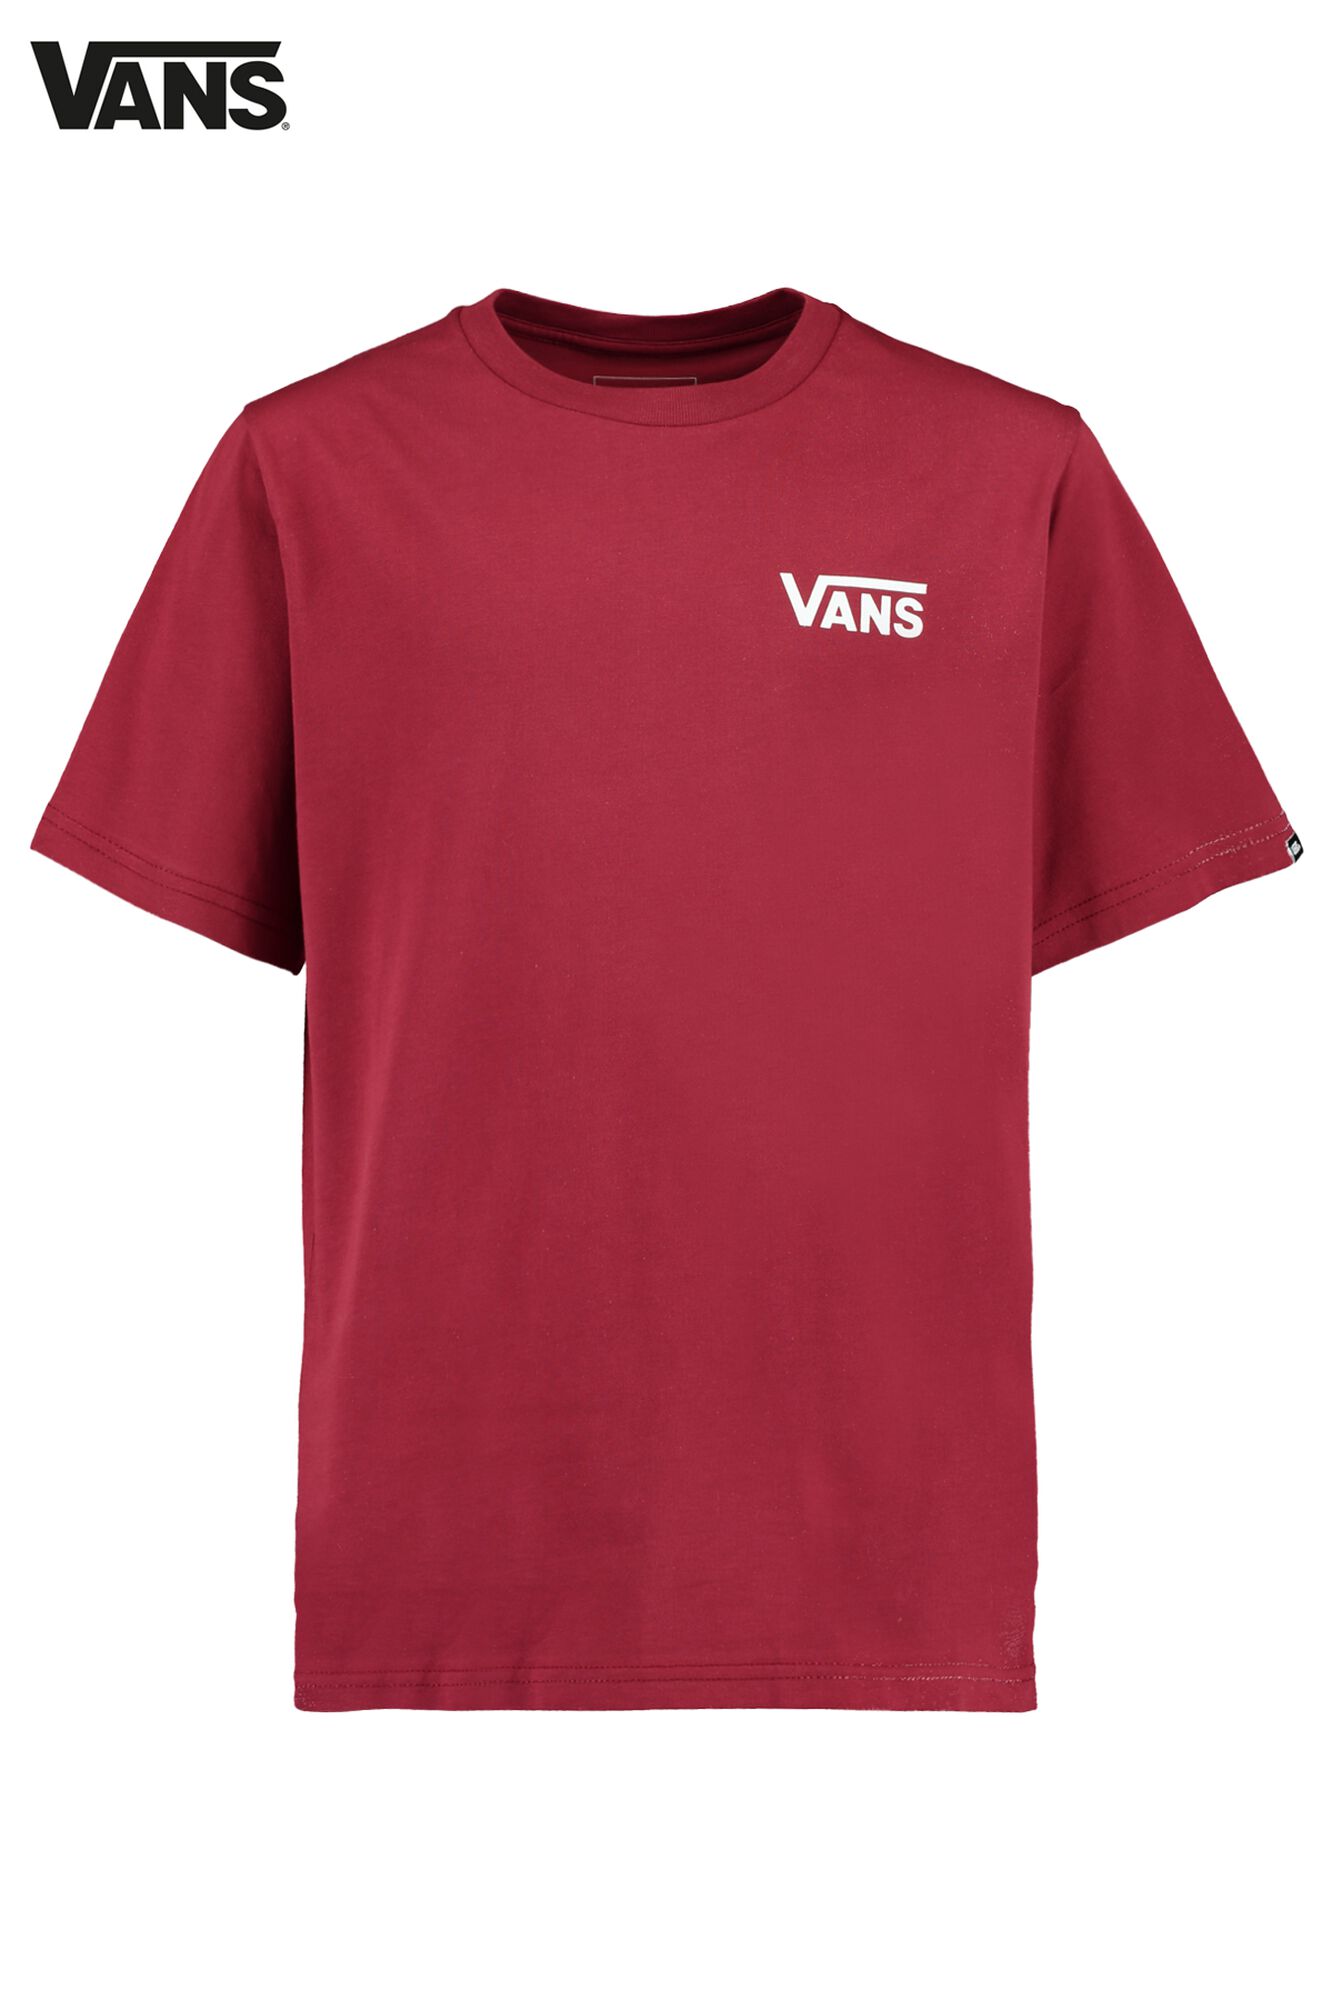 Boys T-shirt Vans Classic logo Red Buy Online